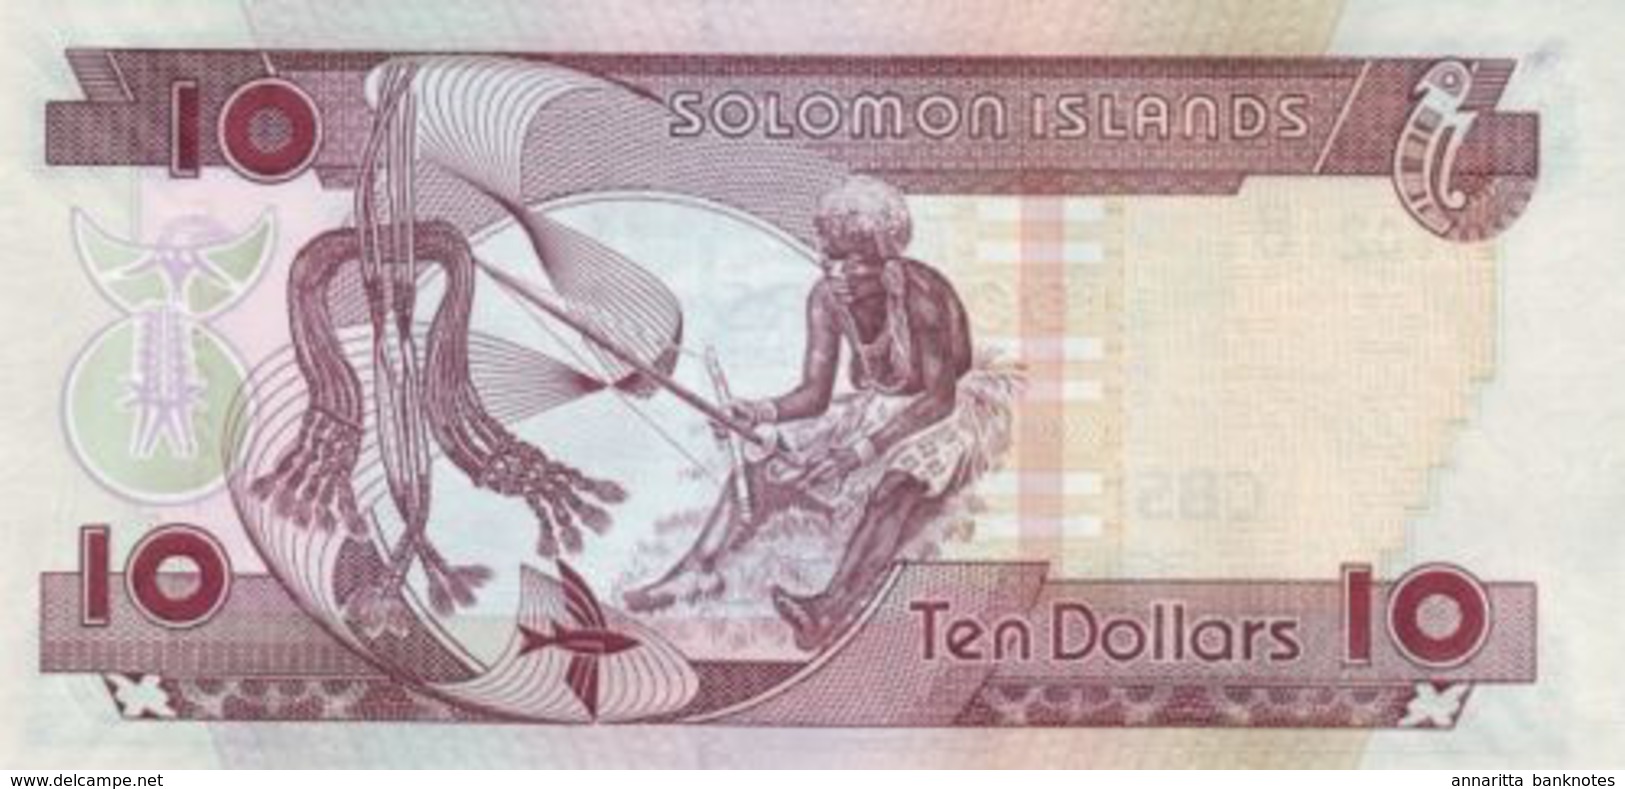 Solomon Islands 10 Dollars ND (2009), UNC, P-27a, SB217a - Isla Salomon